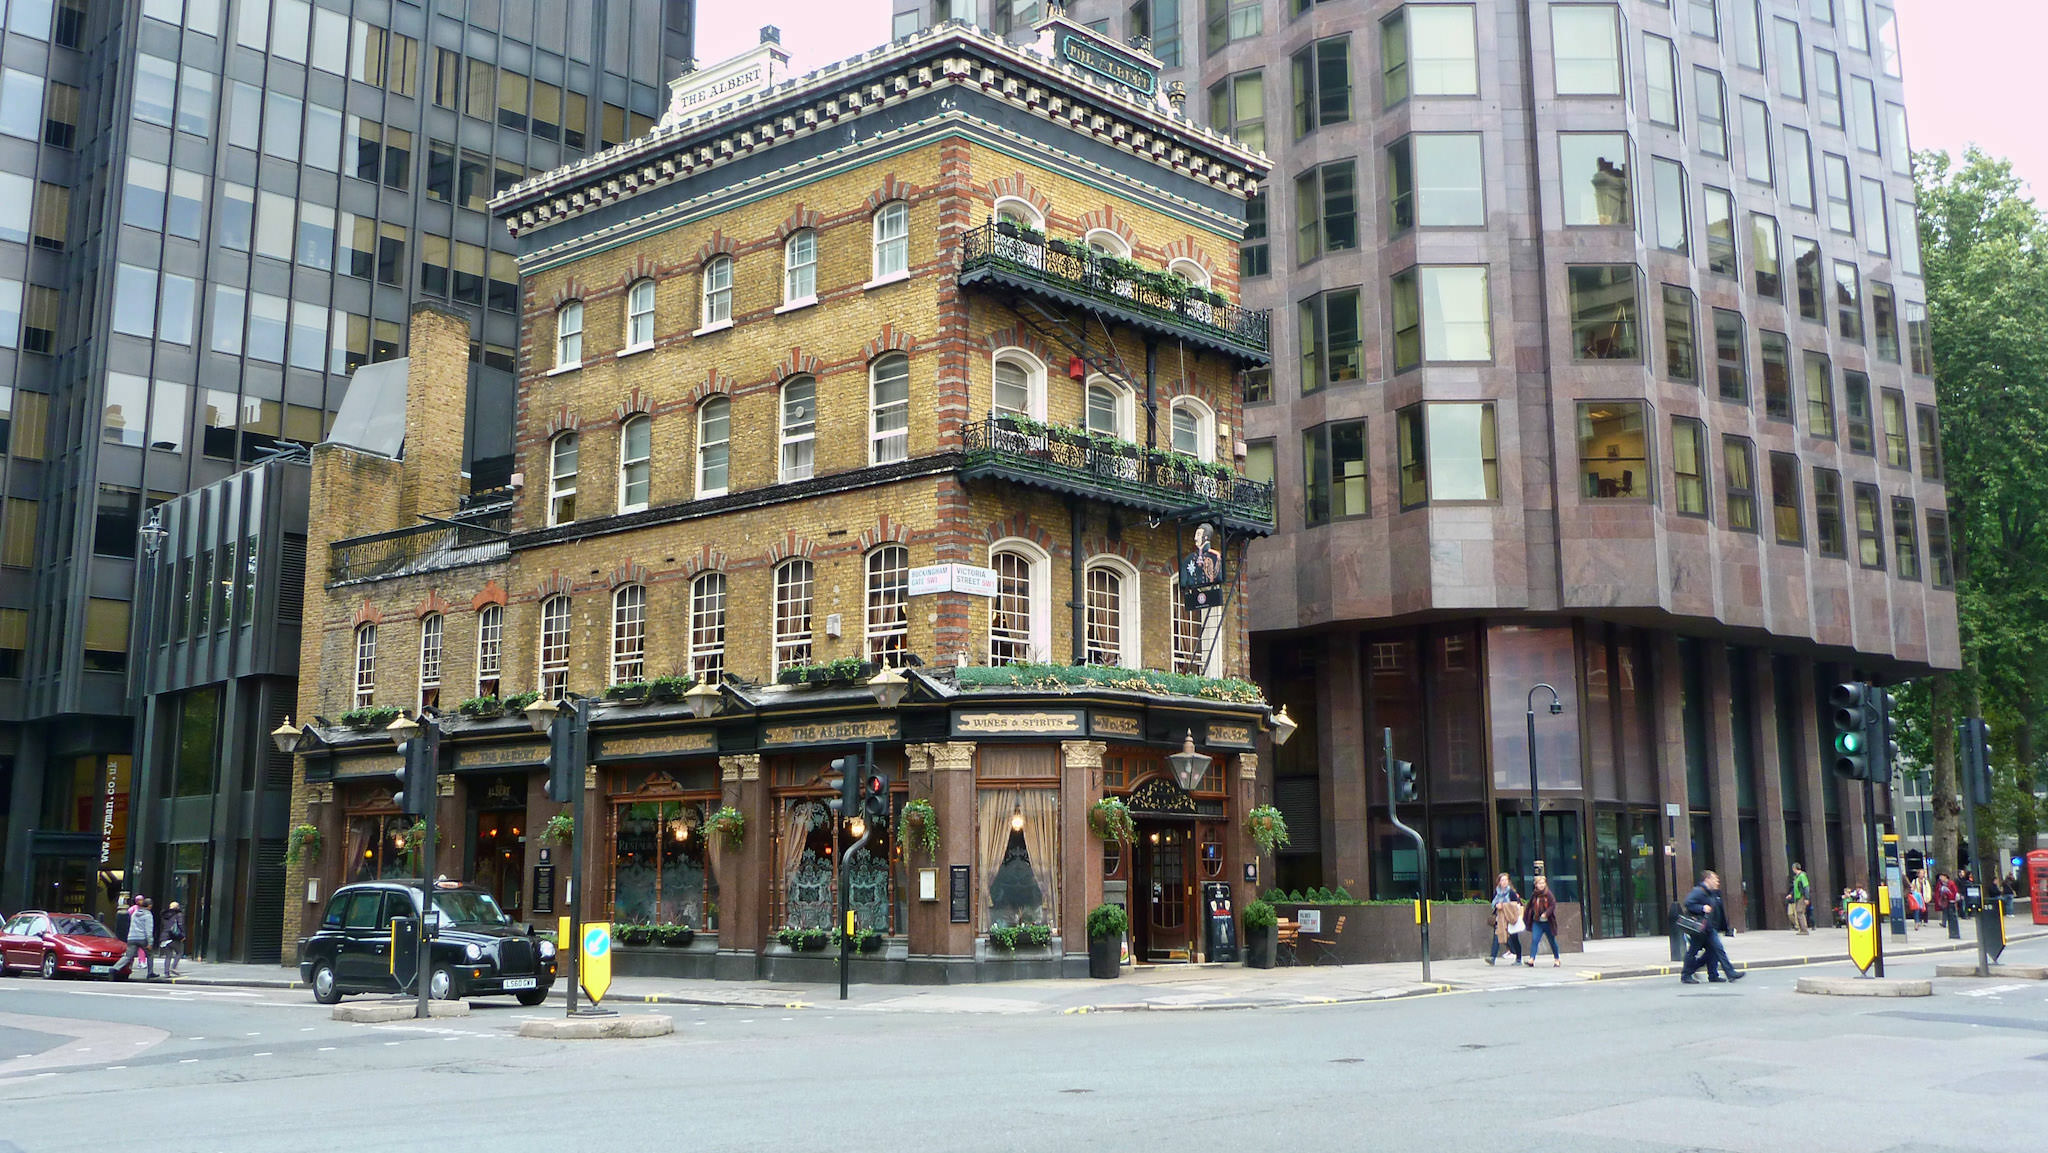 The Albert Tavern - Victoria St.